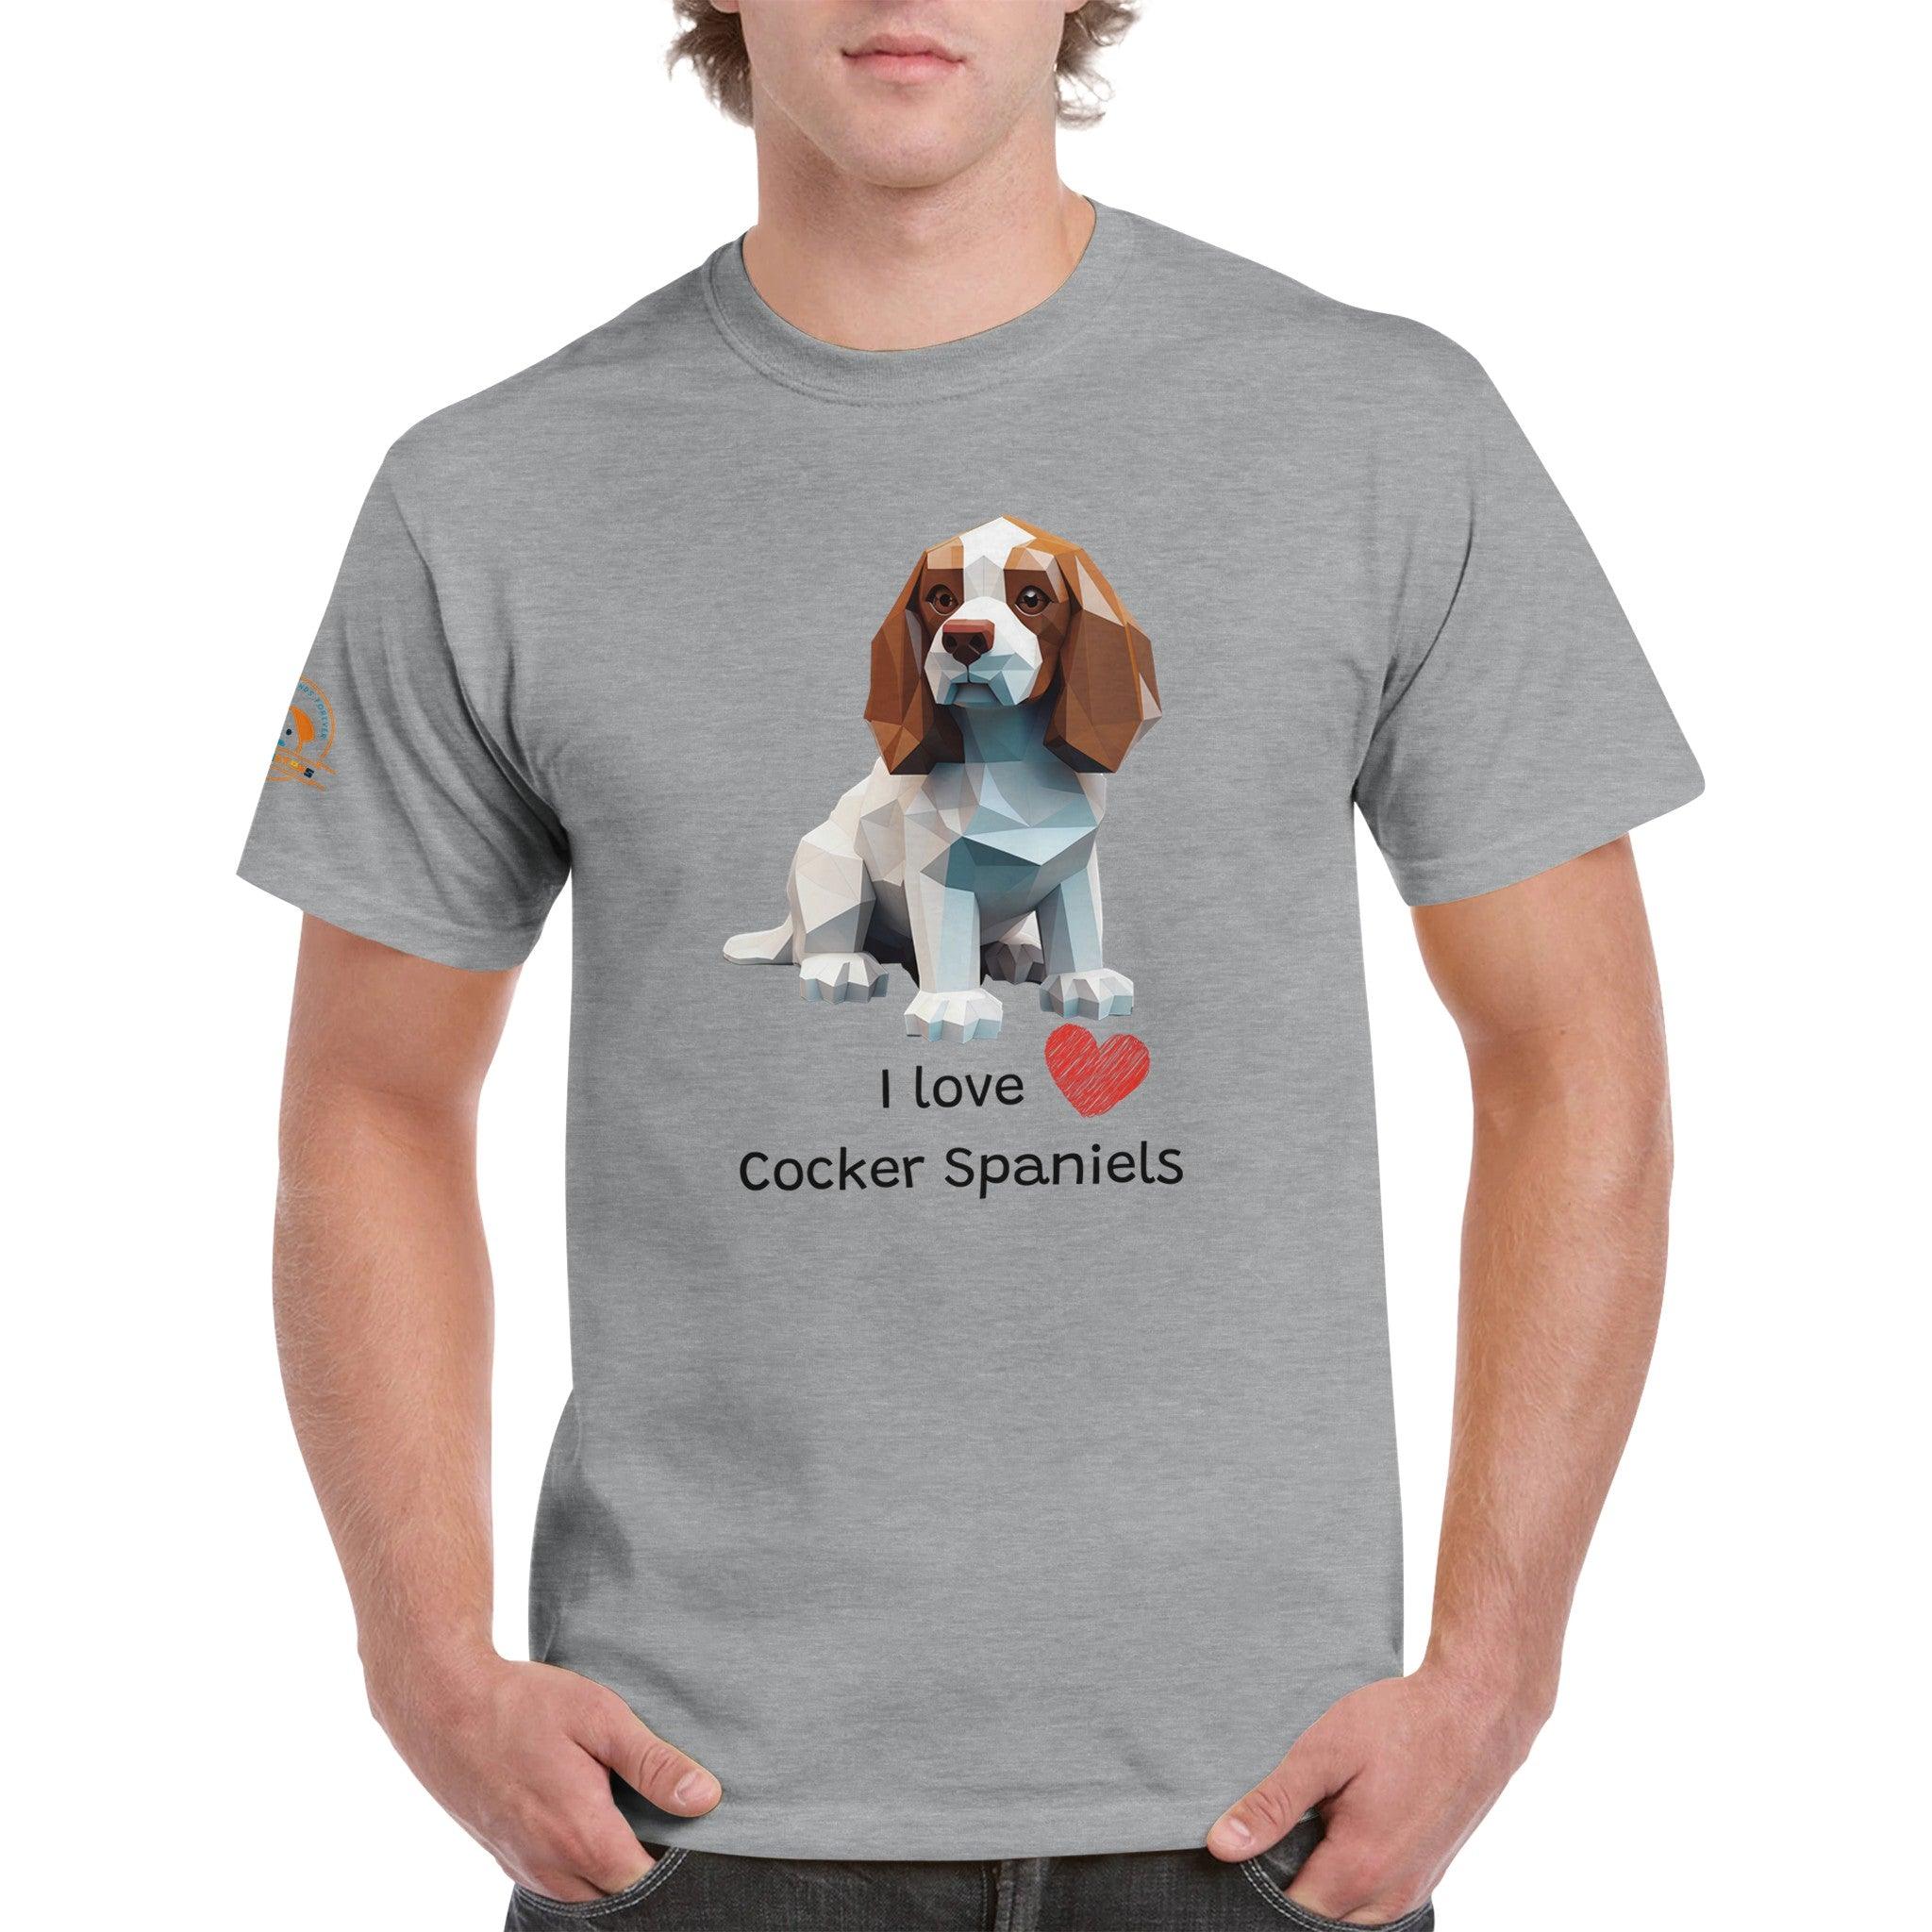 Polygon Pups: Cocker Spaniels - Geometric Dog Breed T-Shirt - Woofingtons